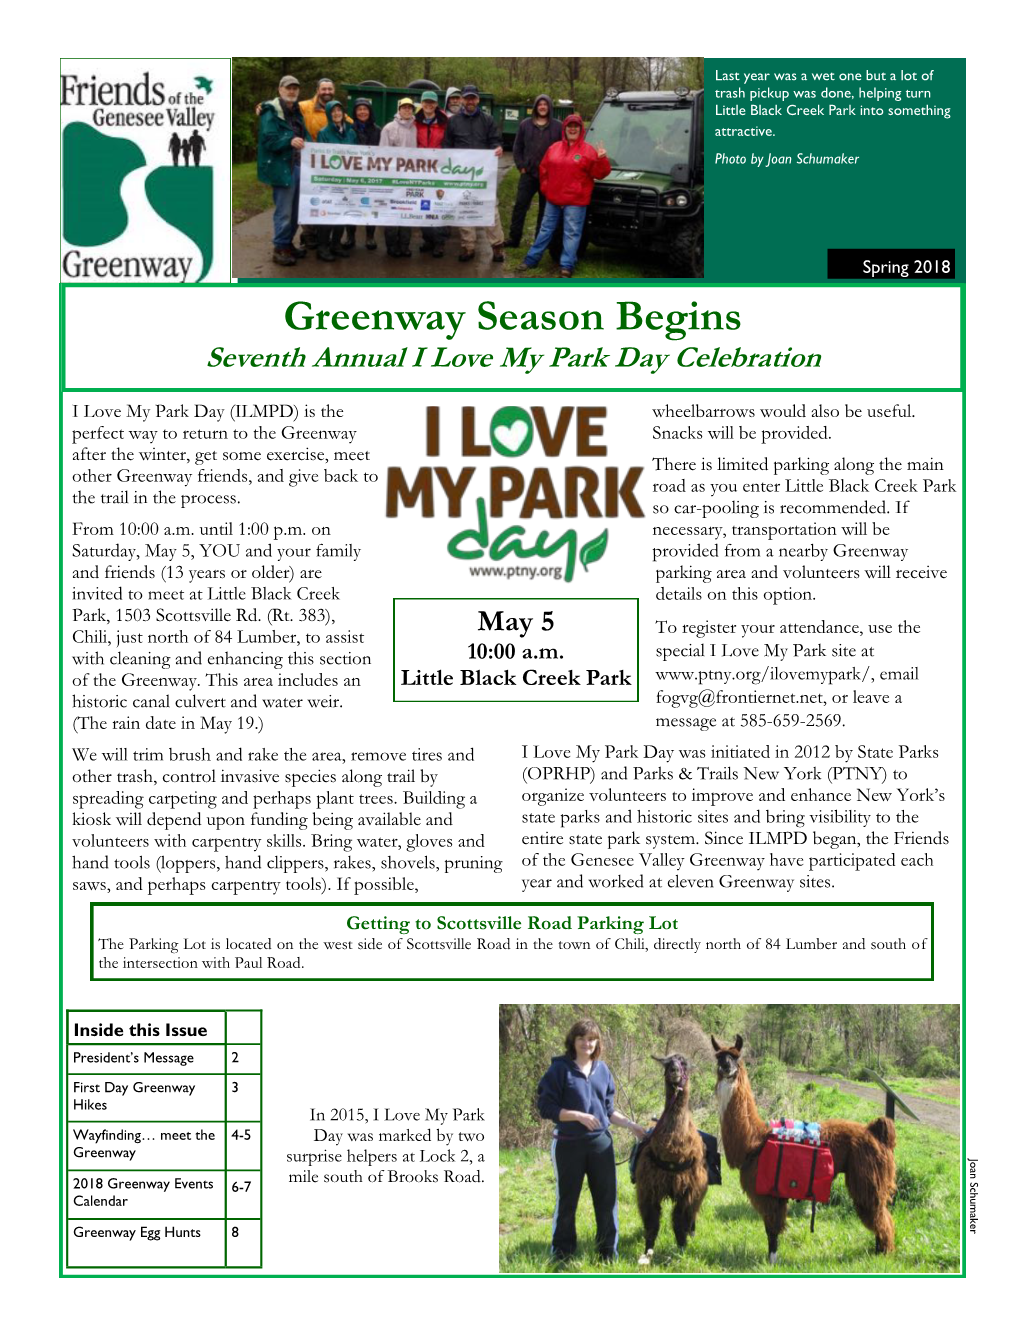 Spring 2018 Greenway News